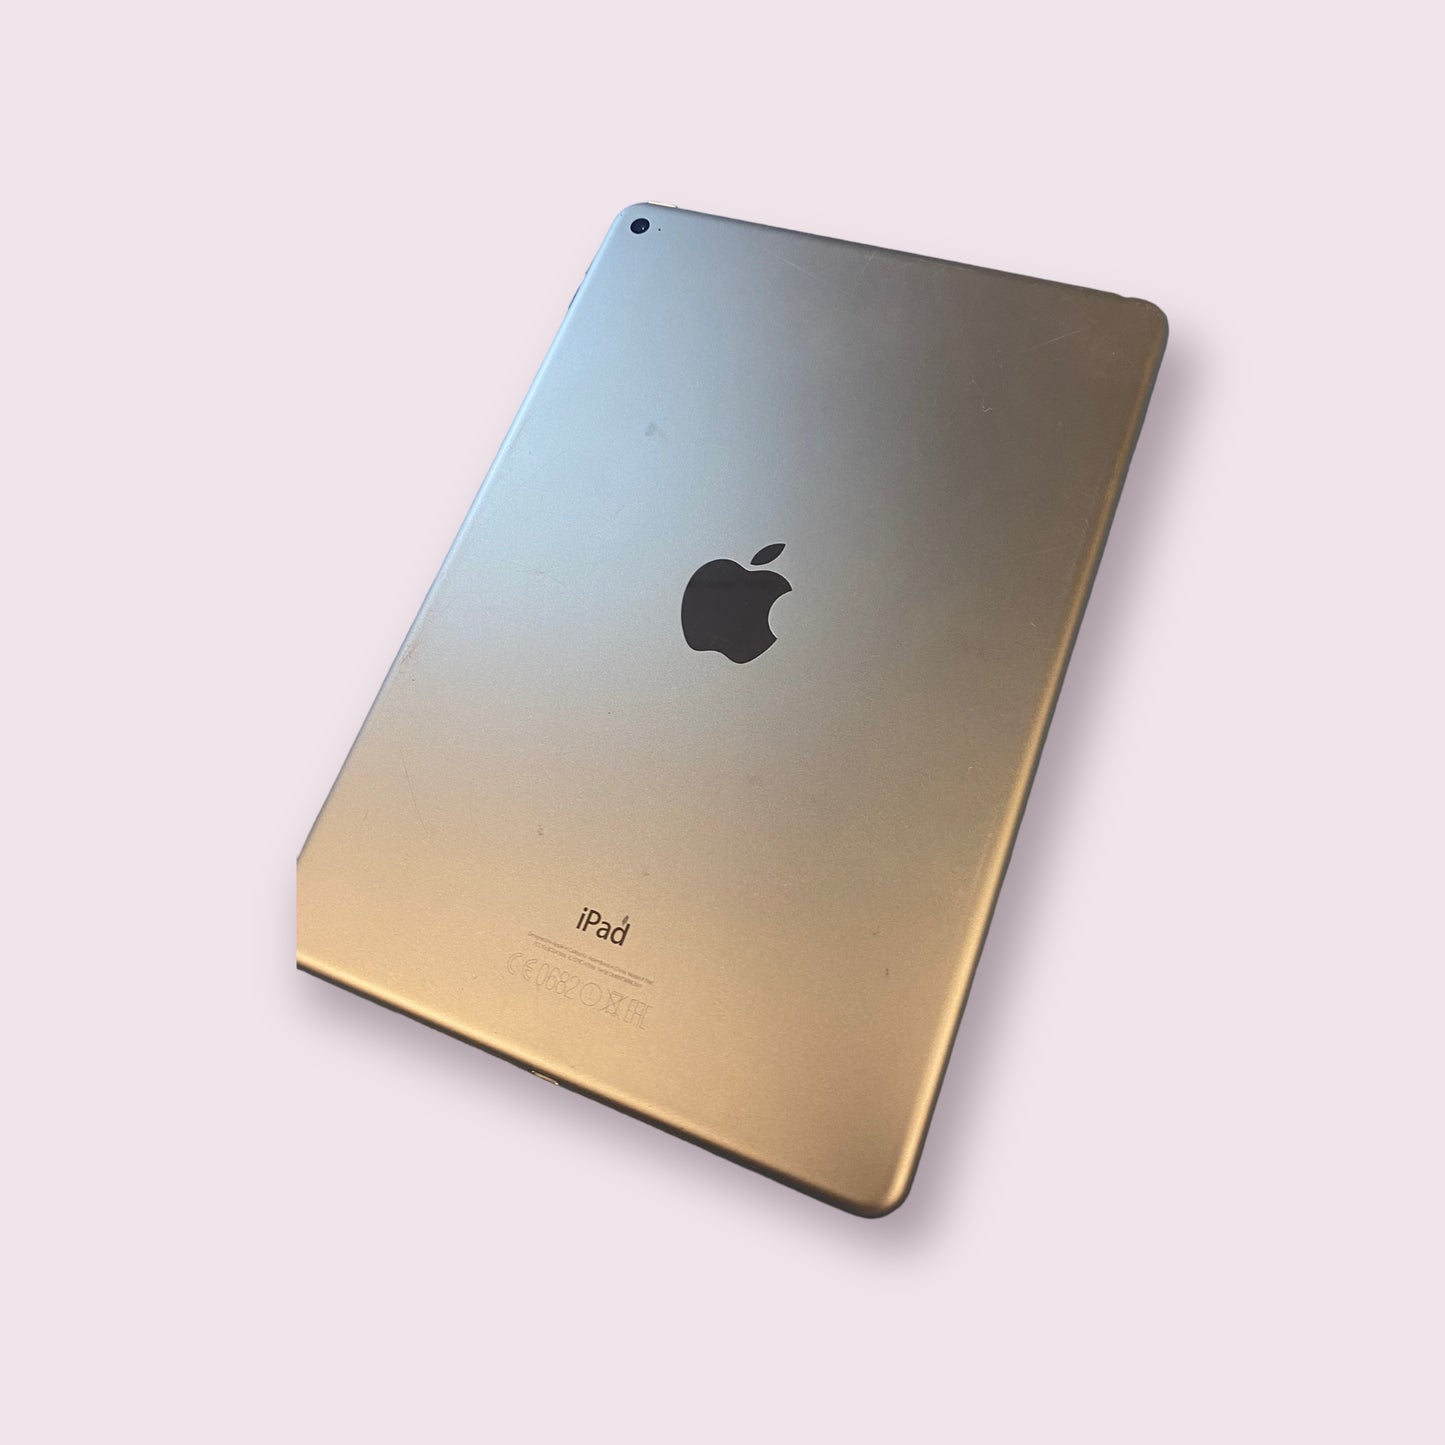 Apple iPad Air 2 64GB Silver Tablet - WIFI - Grade B